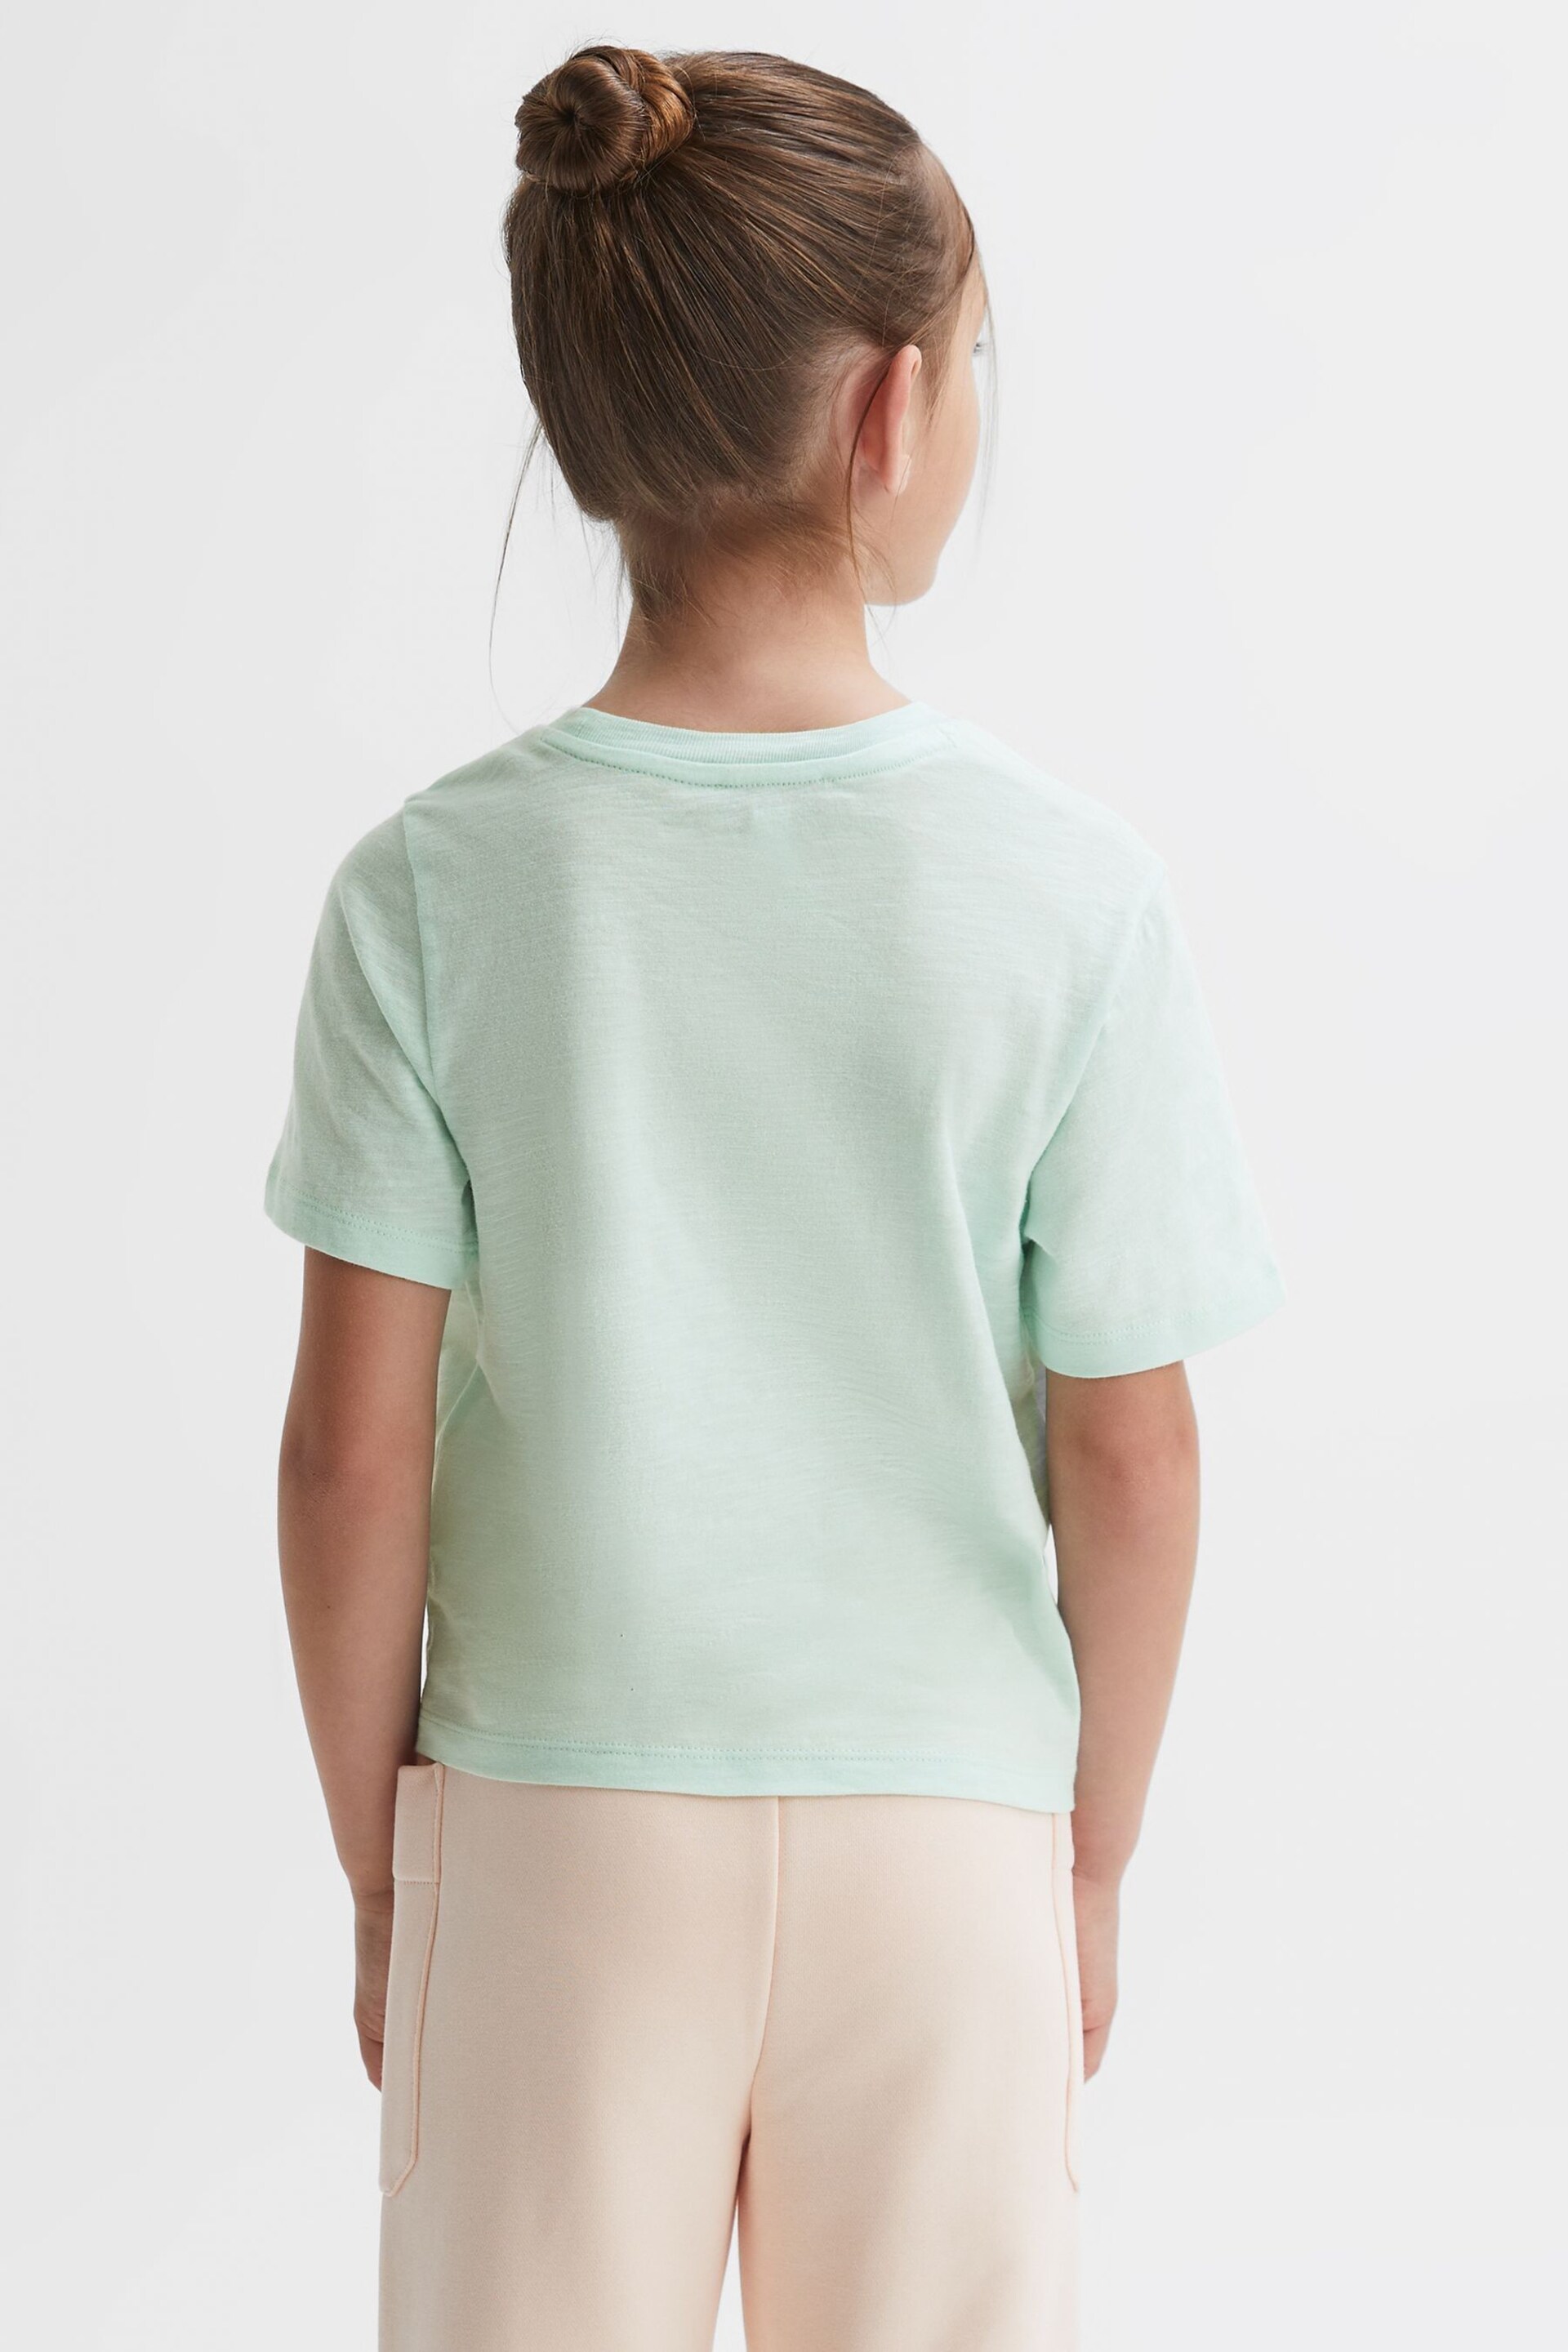 Reiss Sage Swift Junior Embellished Crew Neck T-Shirt - Image 5 of 6